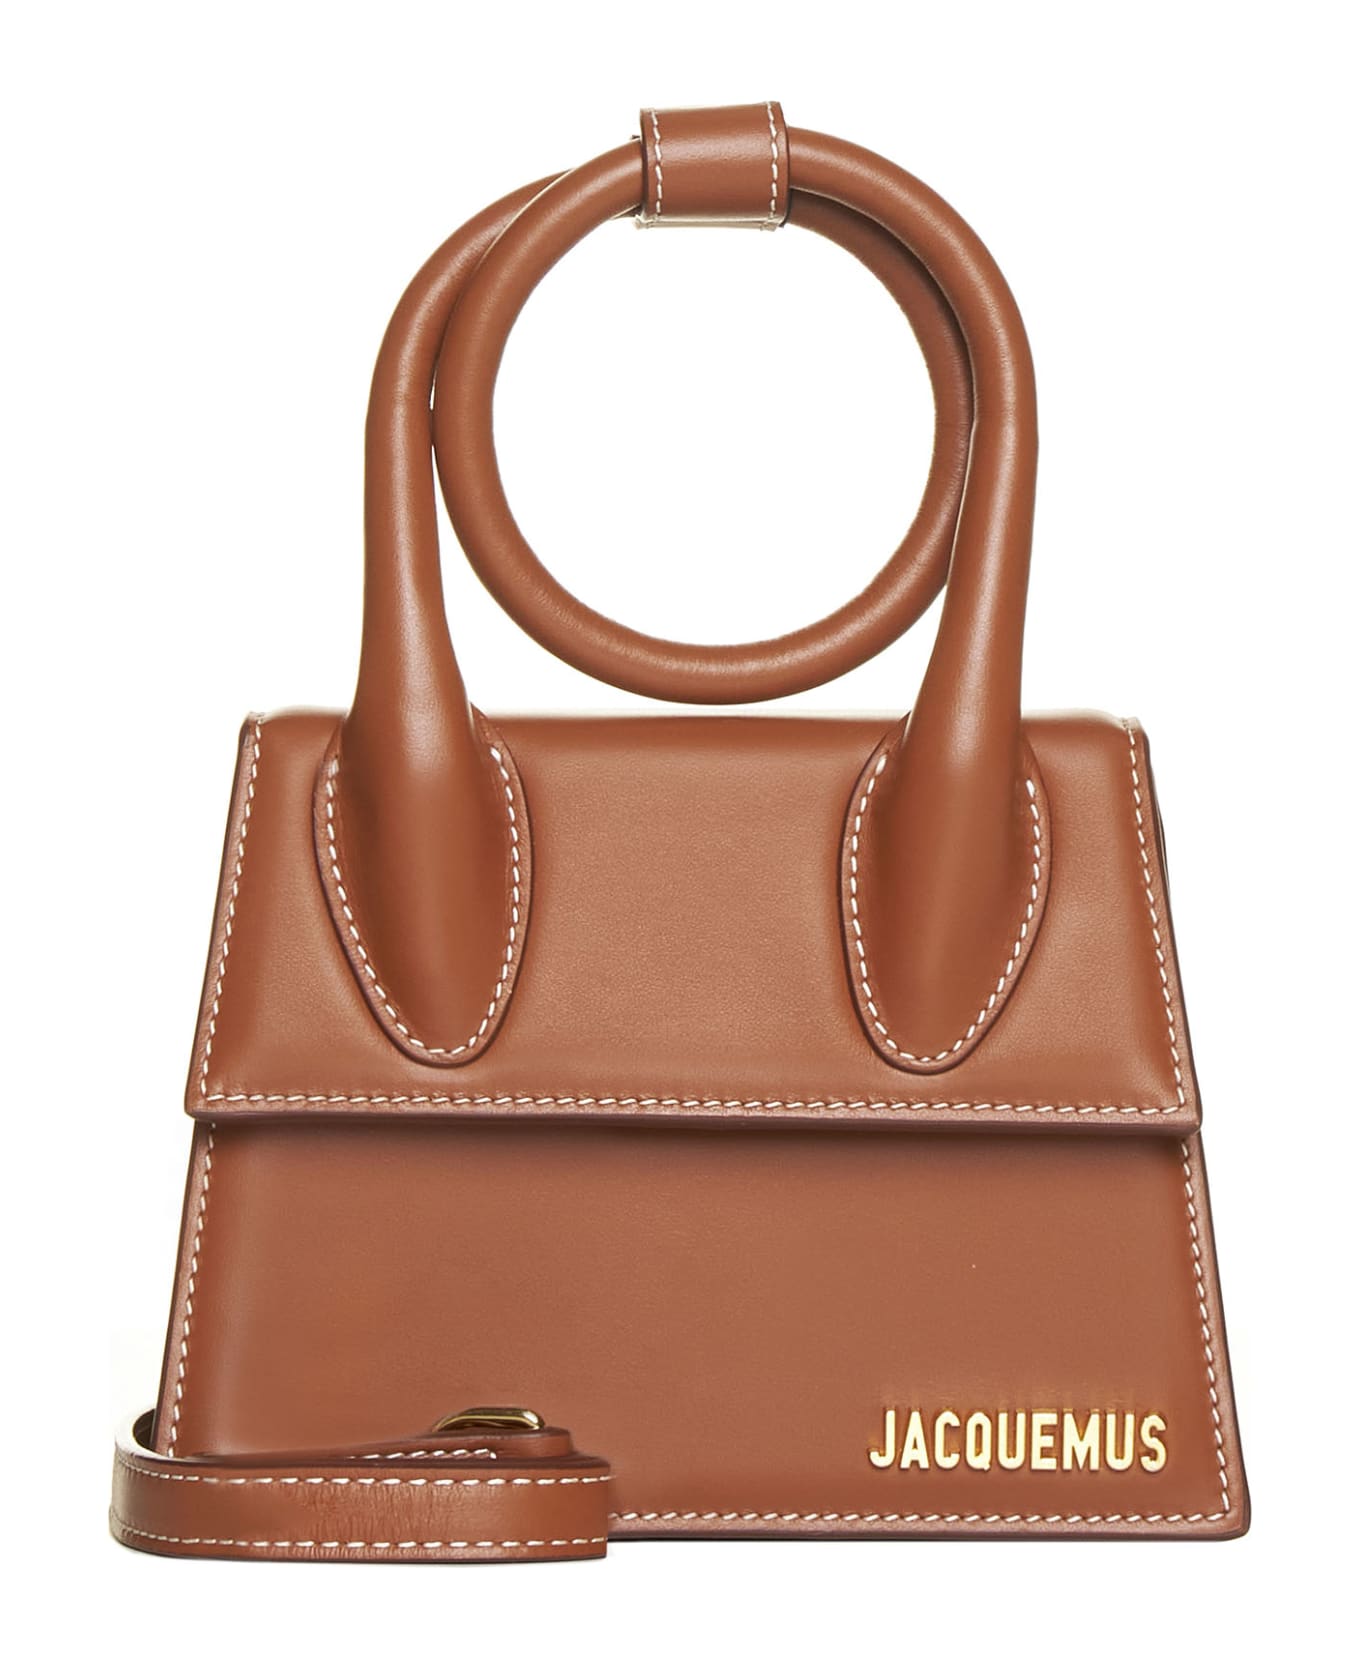 Jacquemus Tote - Light brown 2